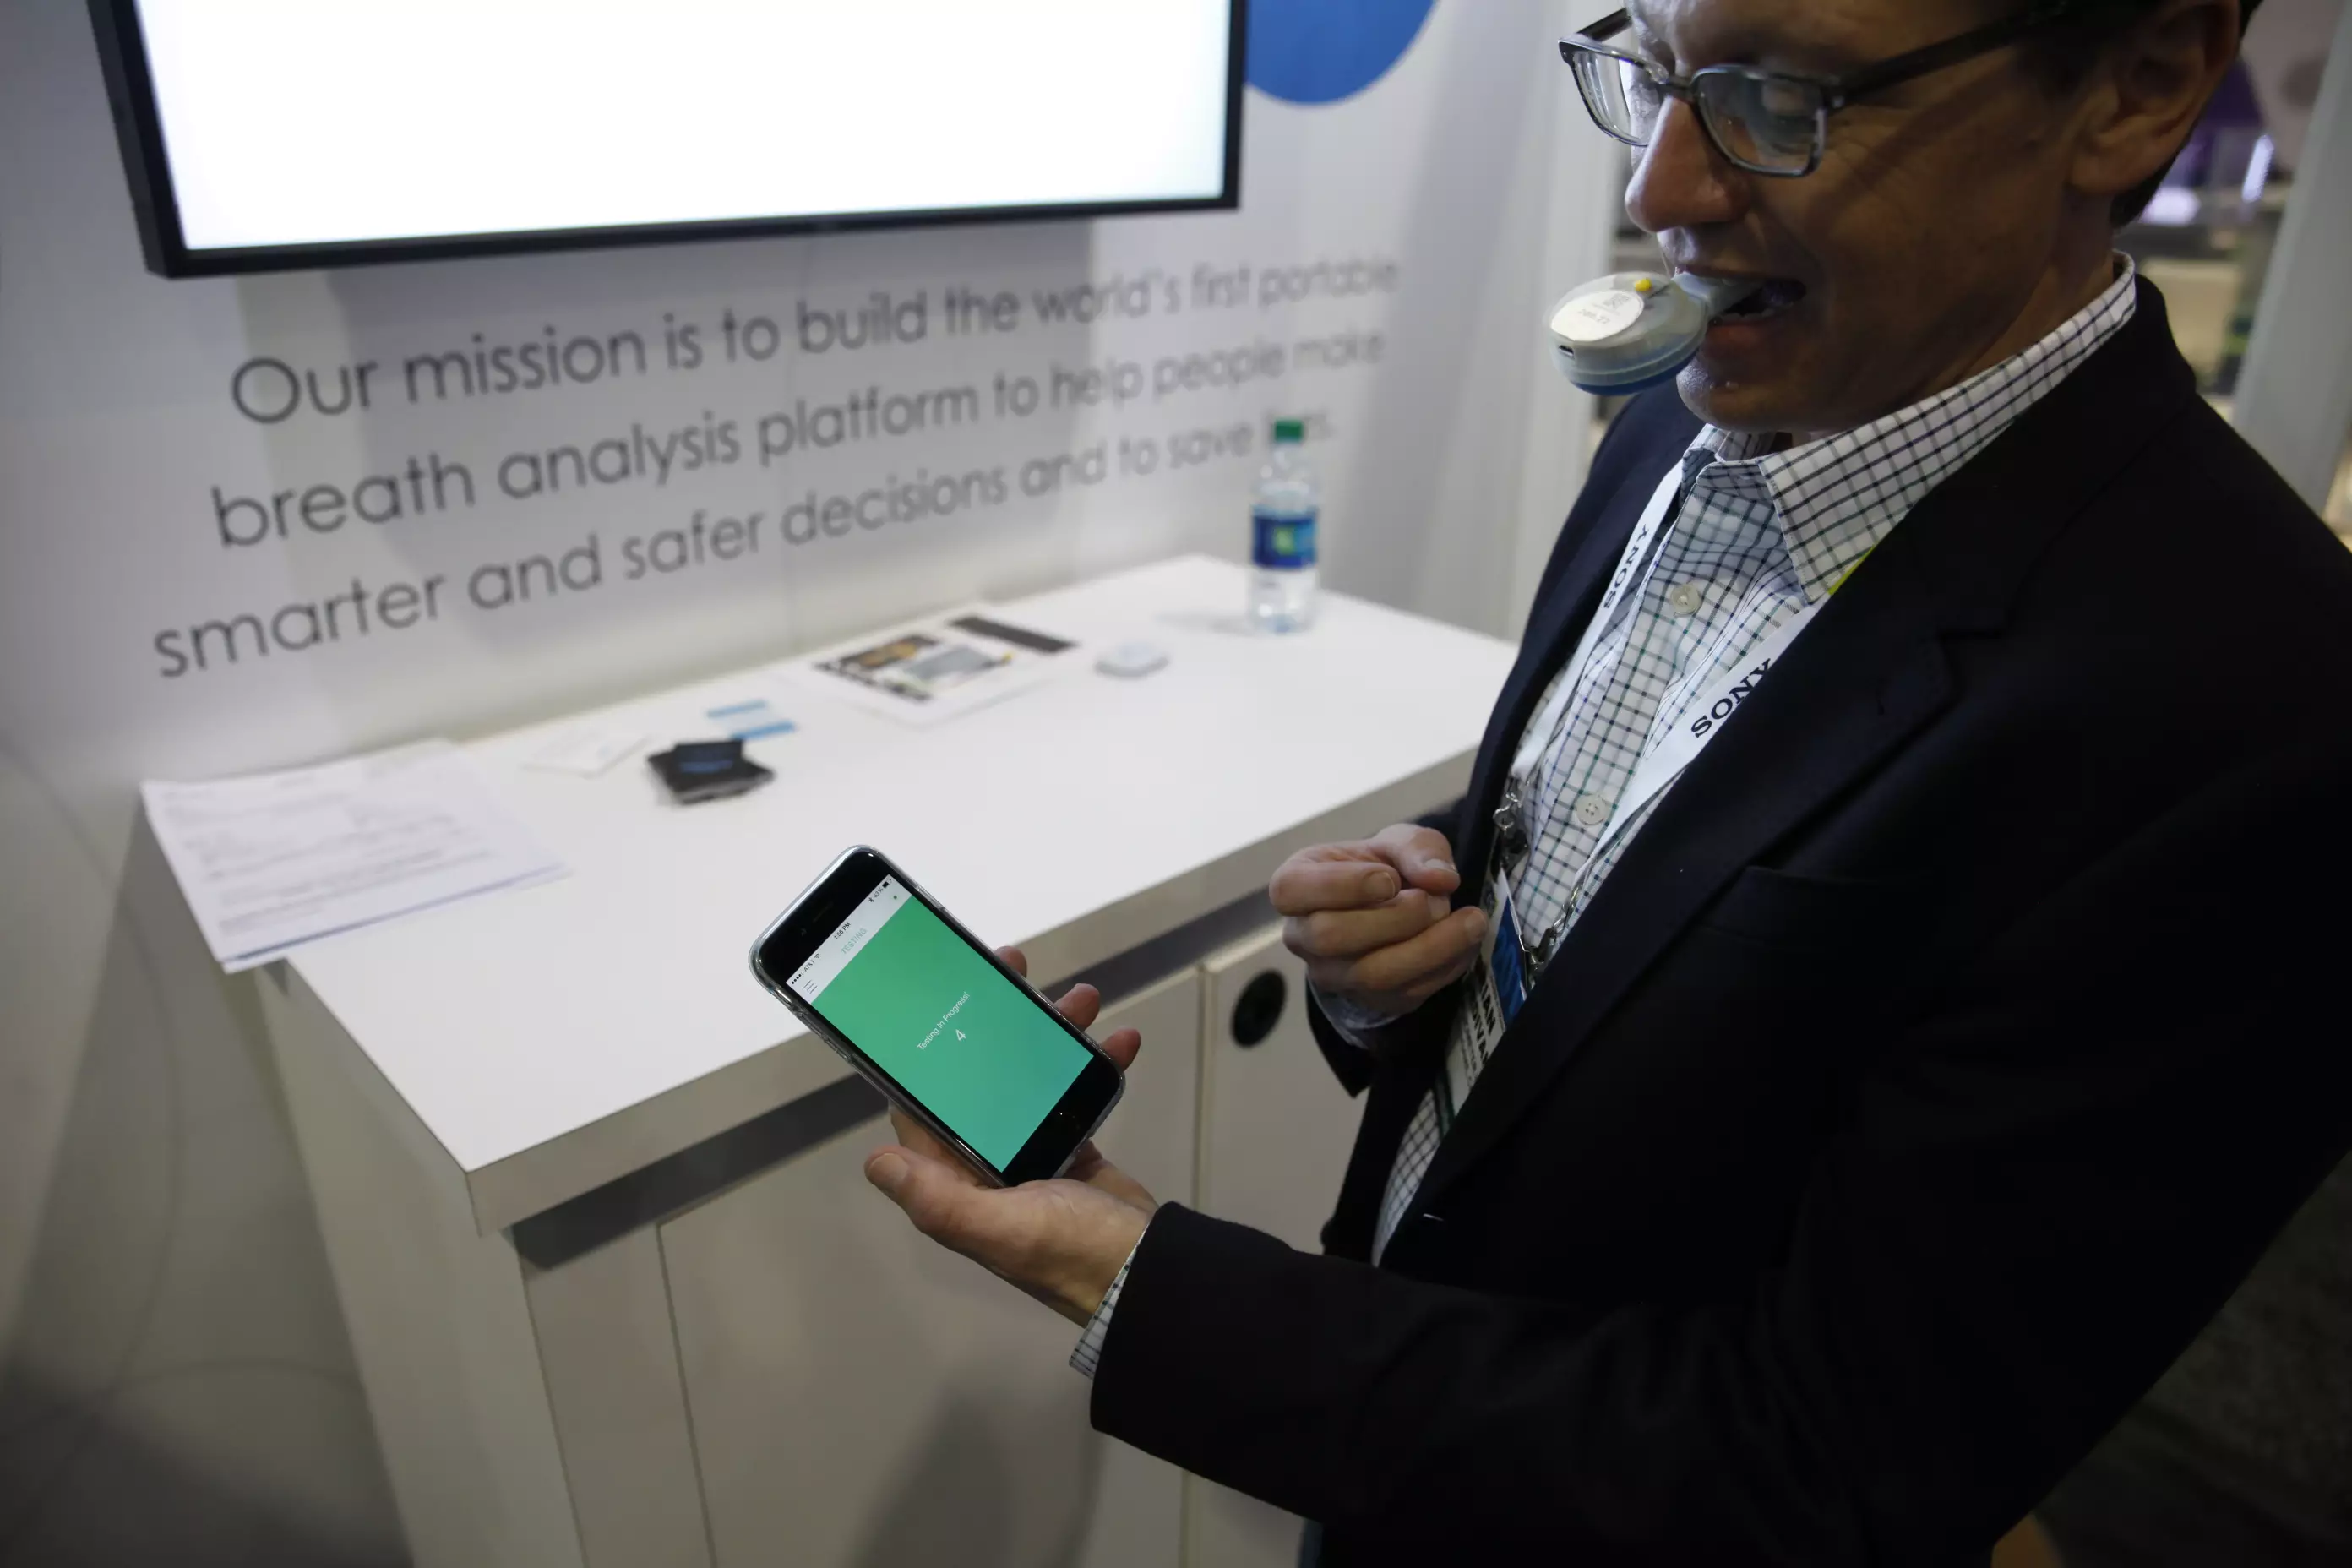 Breathometer mint CES 2015 demonstration prototype